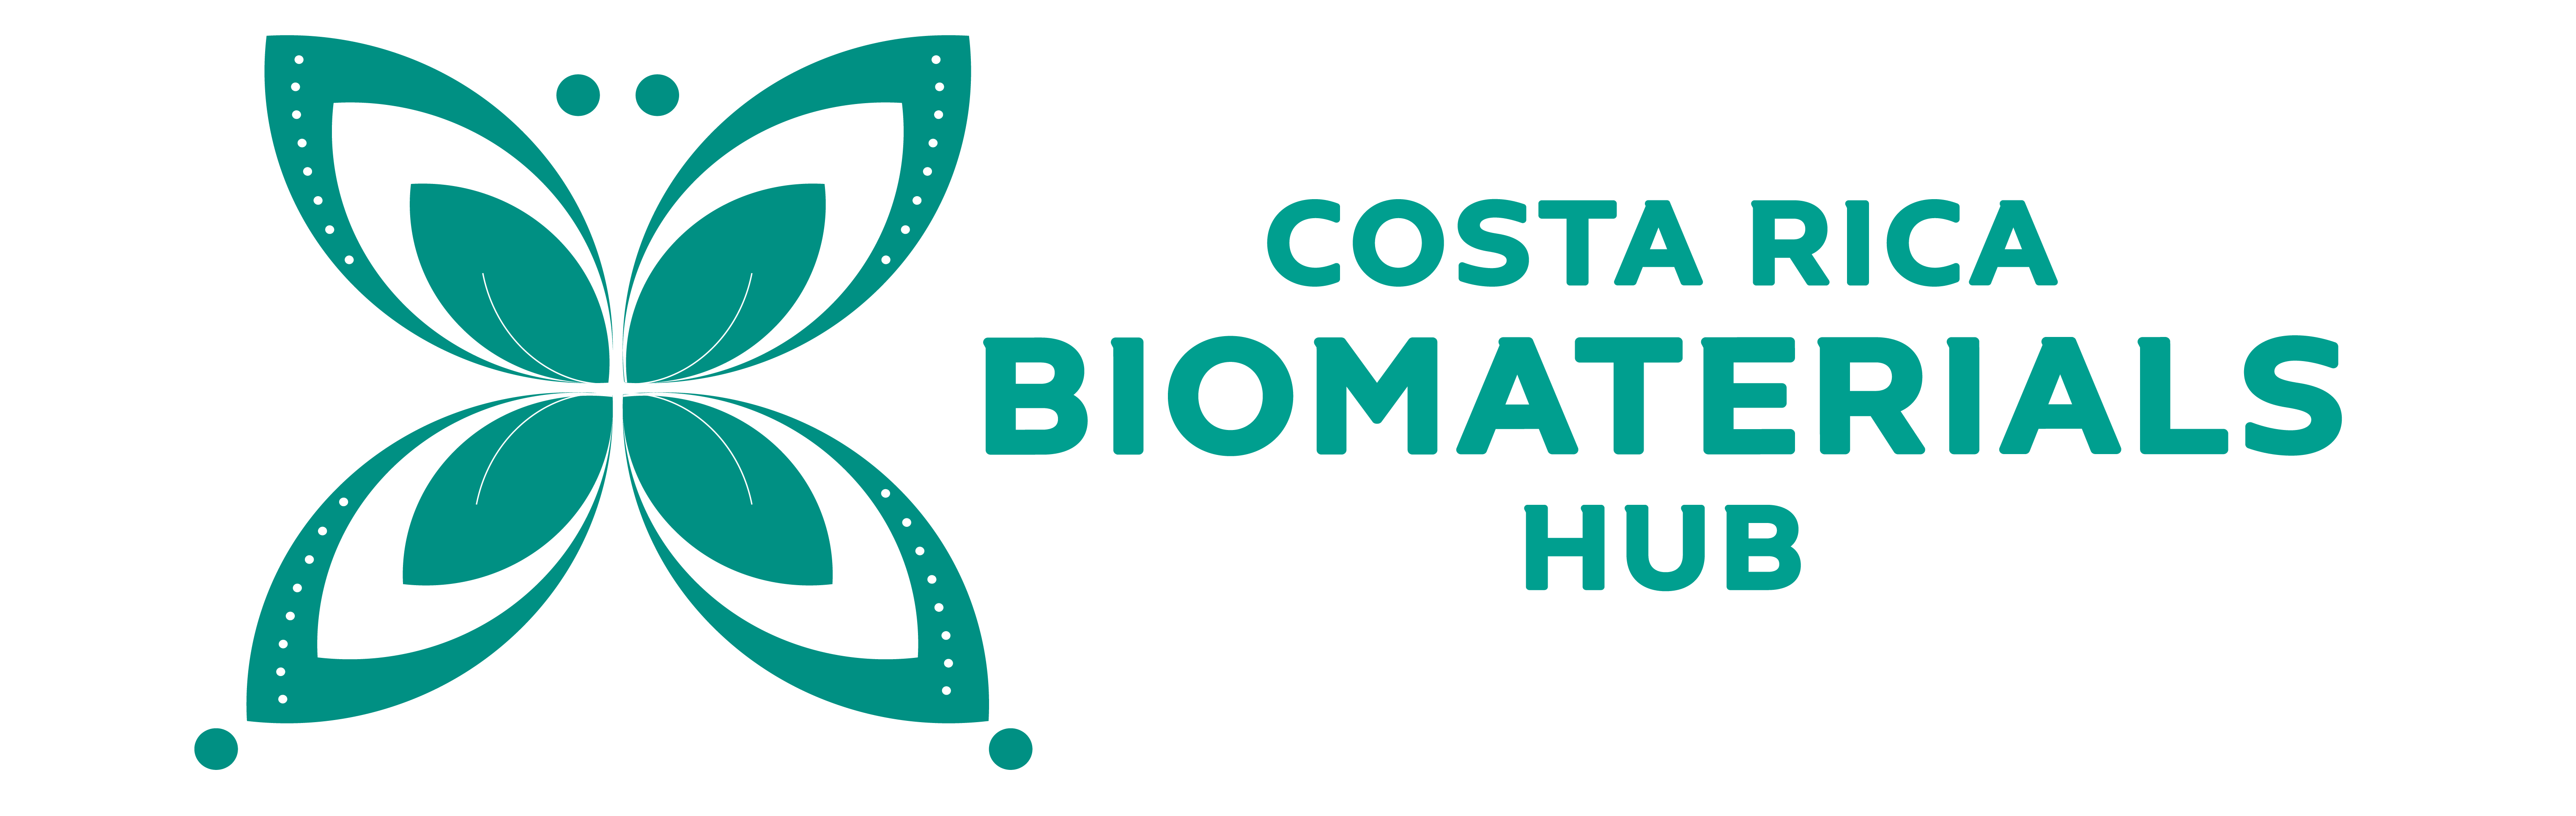 Biomaterials Hub_Logo-01